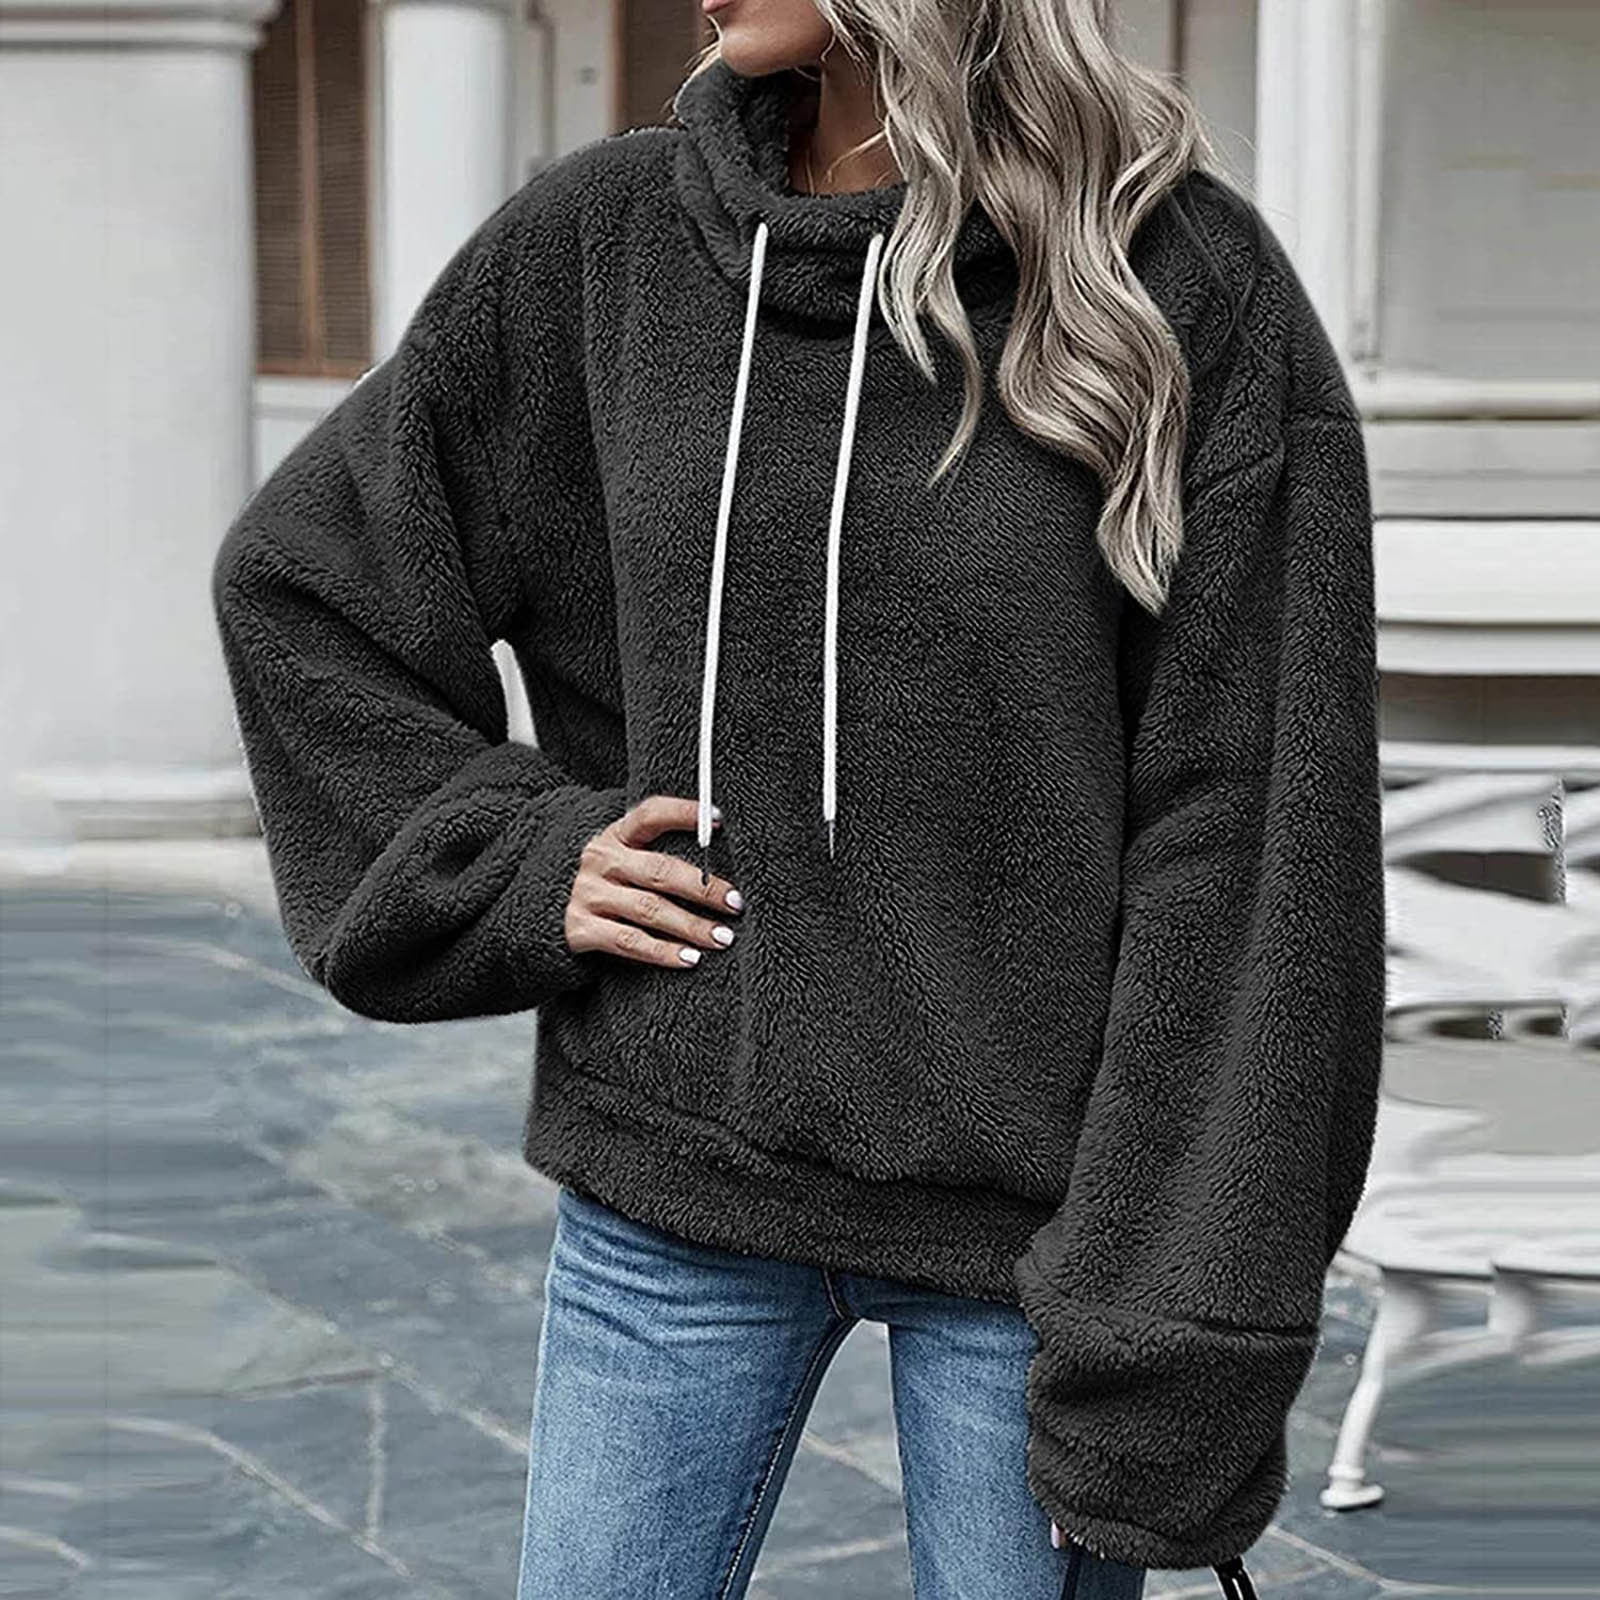 Ecupper Womens Hoodies Full Zip Up Pocket Coat Tops Jacket Sweatshirt Outwear 